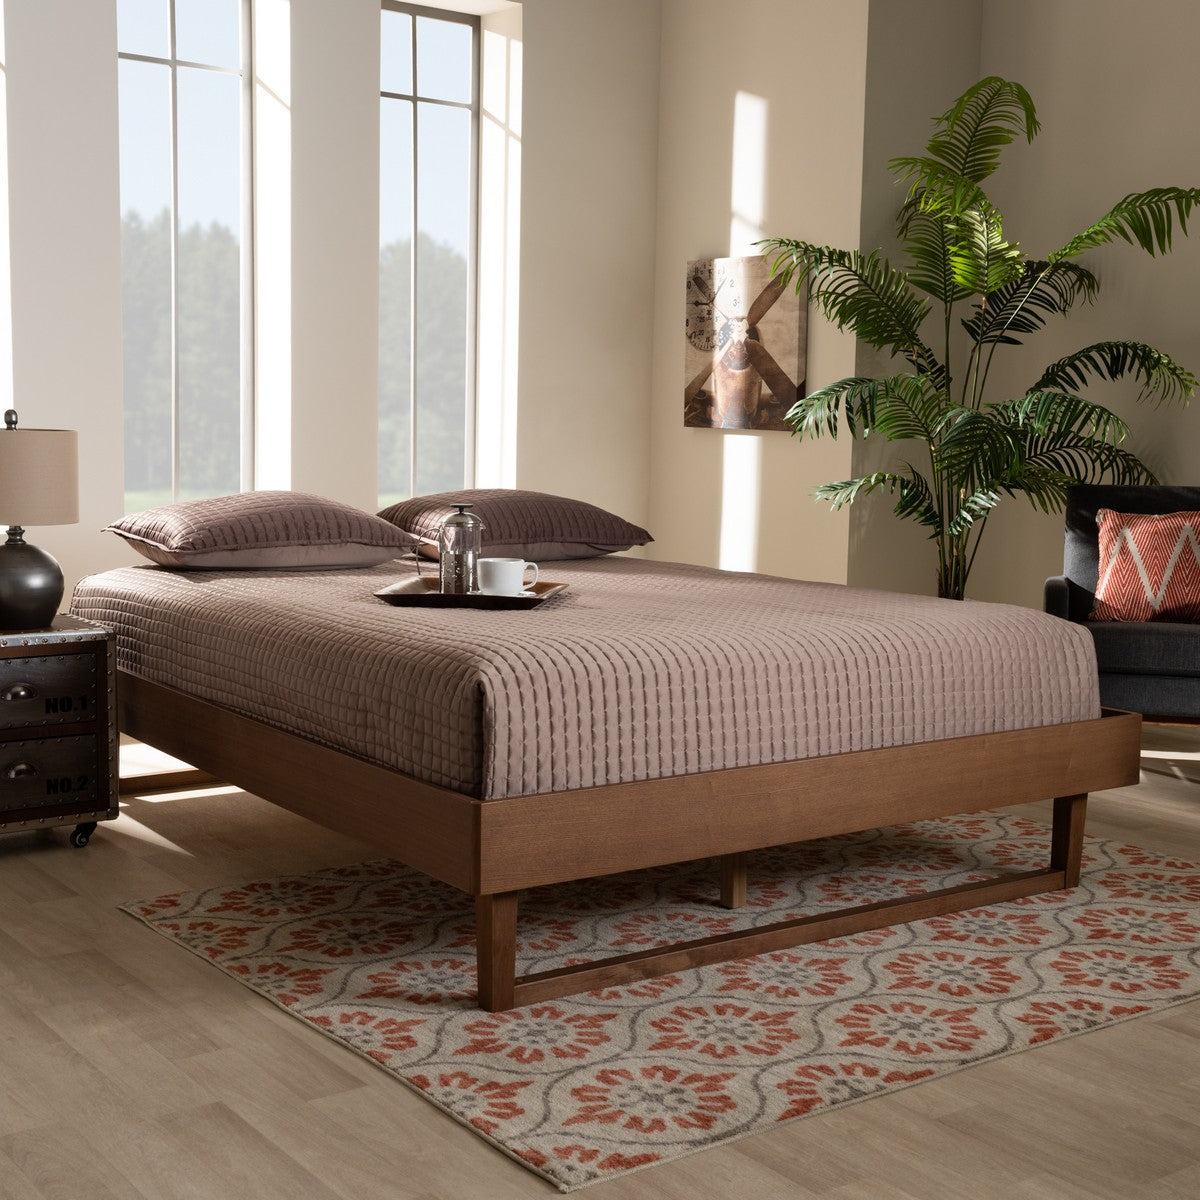 Baxton Studio Liliya Mid-Century Modern Walnut Brown Finished Wood King Size Platform Bed Frame